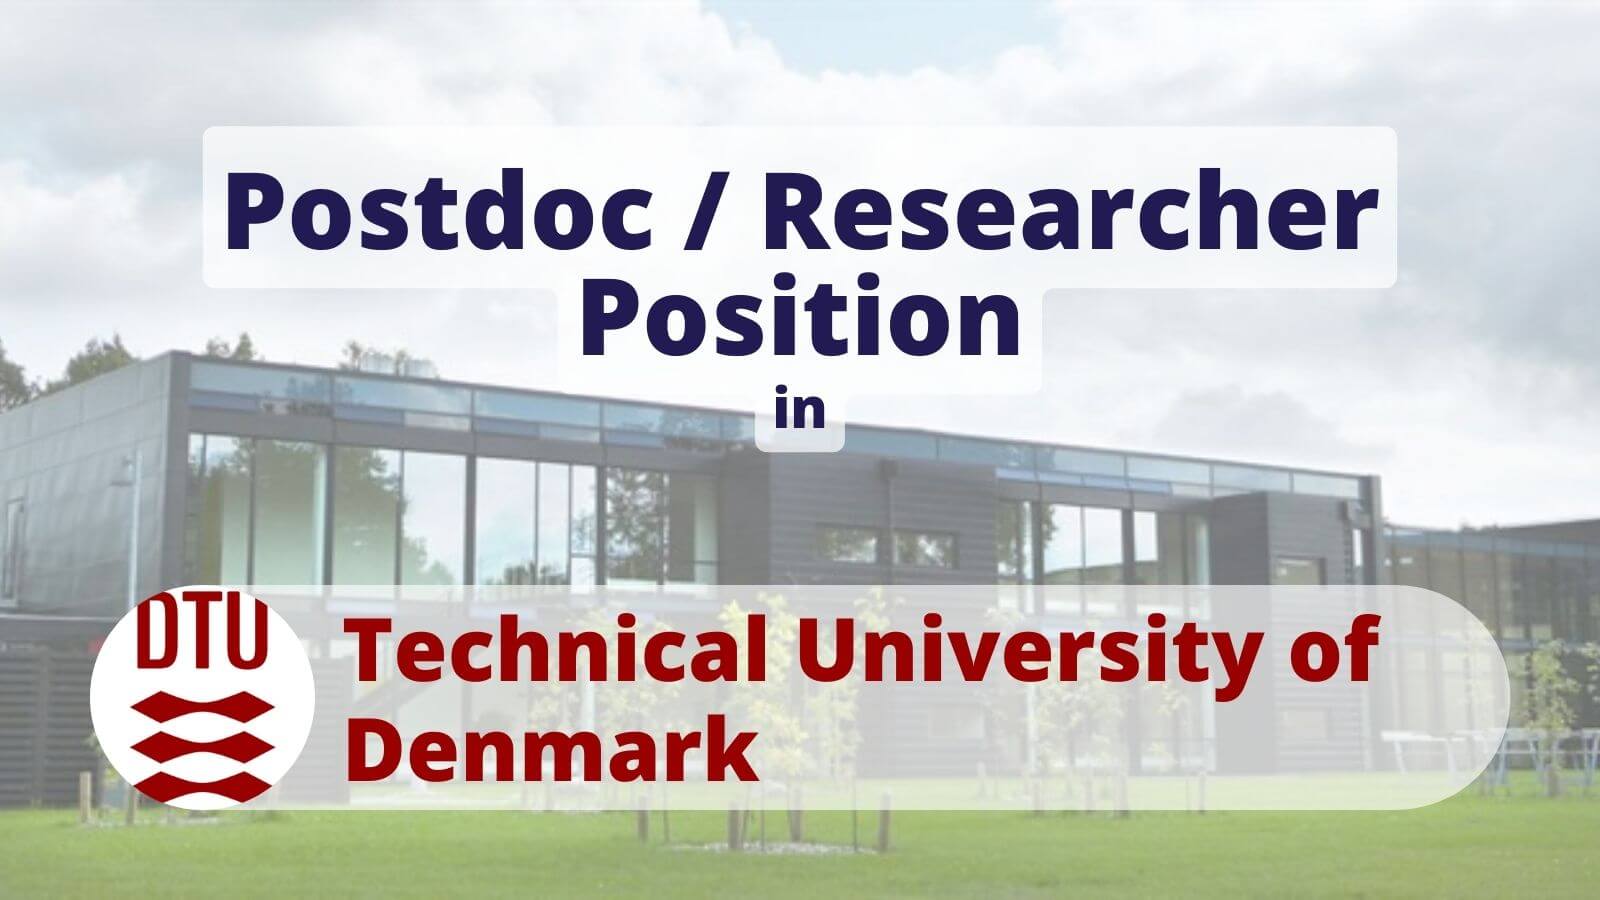 Postdoc jobs or Researcher Position in DTU Technical University of Denmark